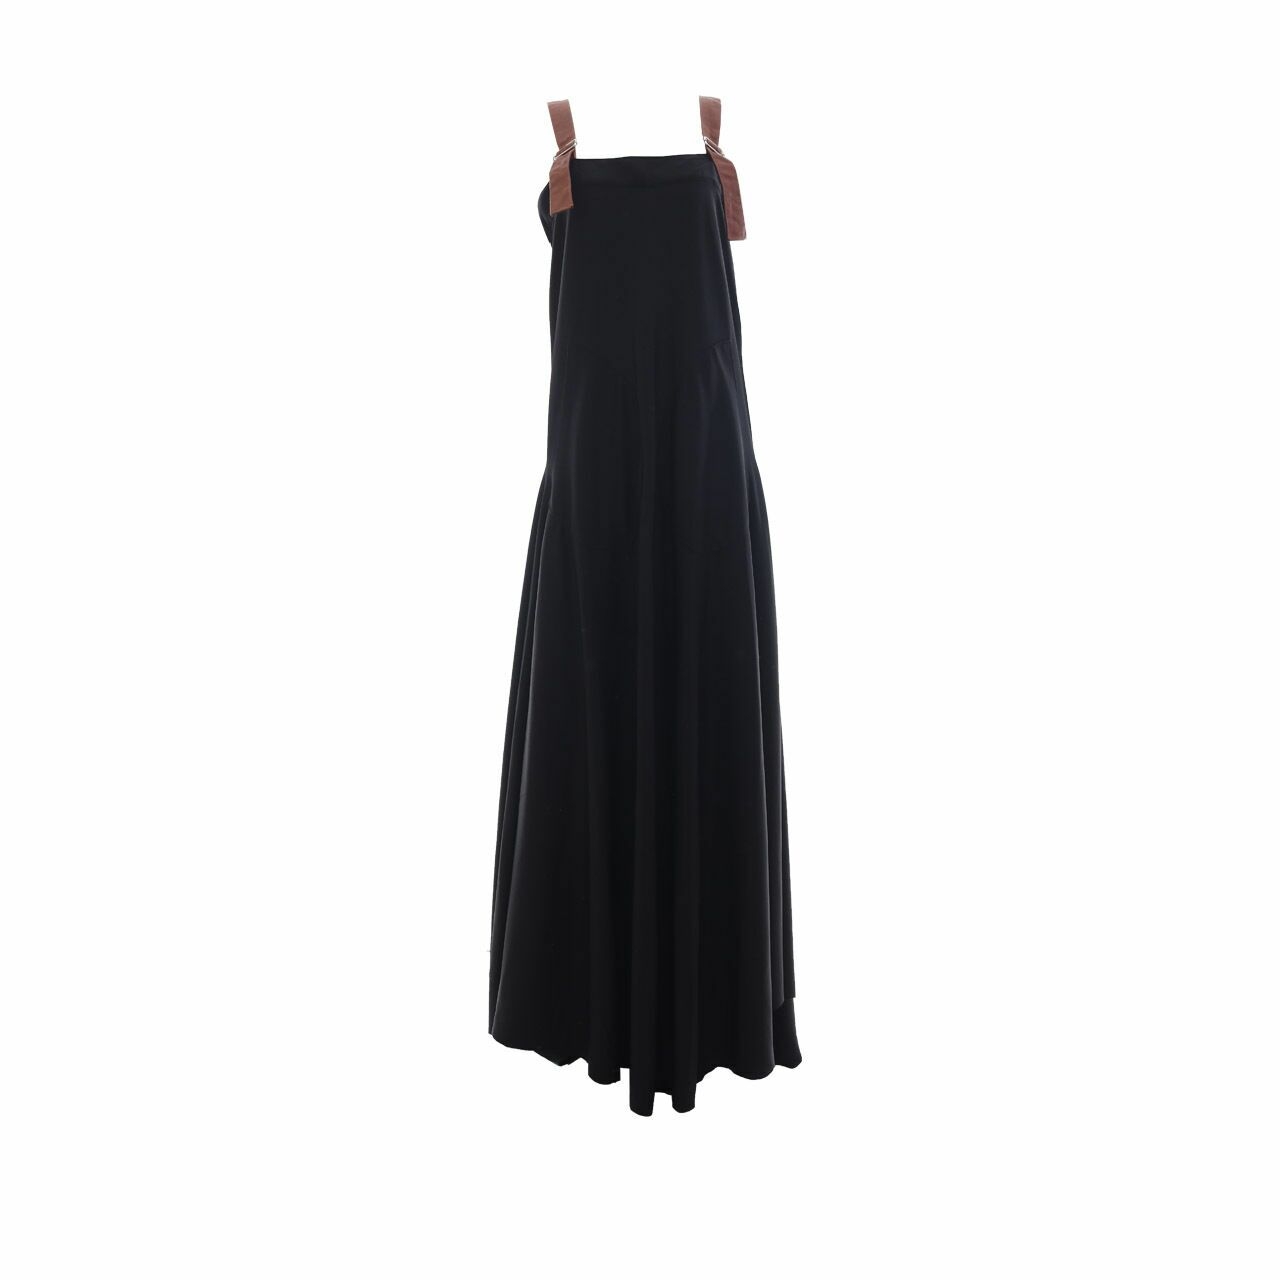 Aleabe Black Long Dress